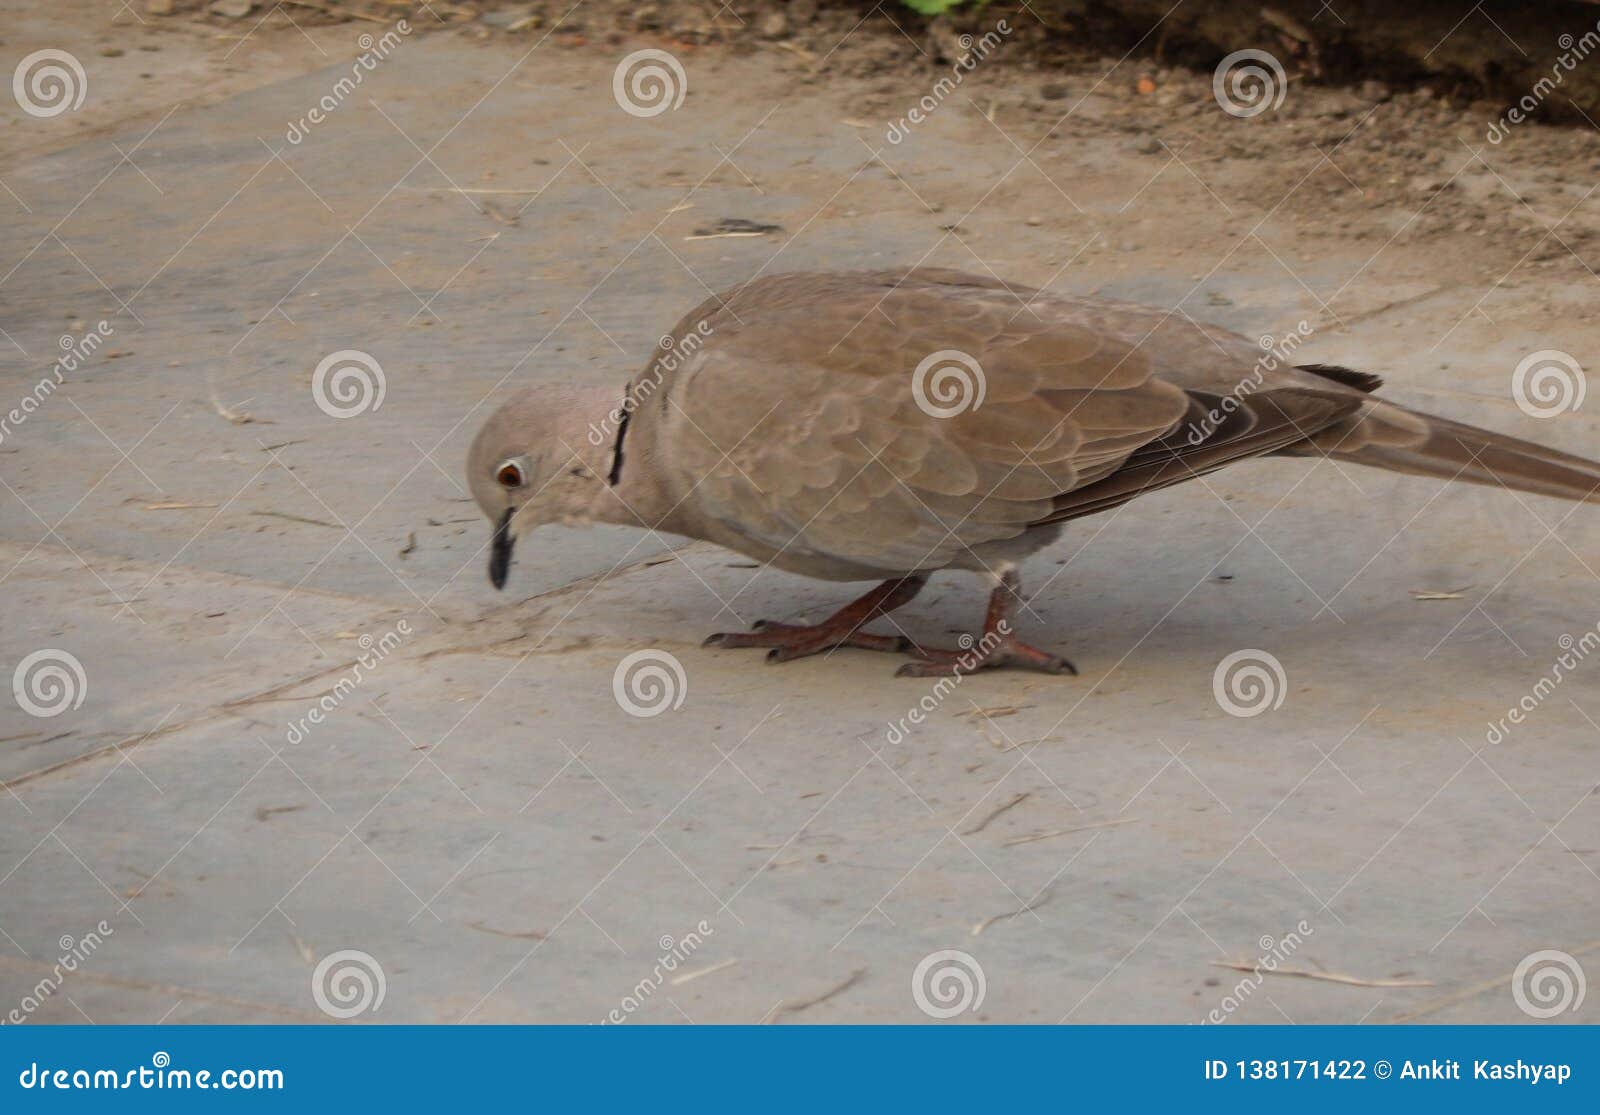 Spotted Dove - Facts, Diet, Habitat & Pictures on Animalia.bio